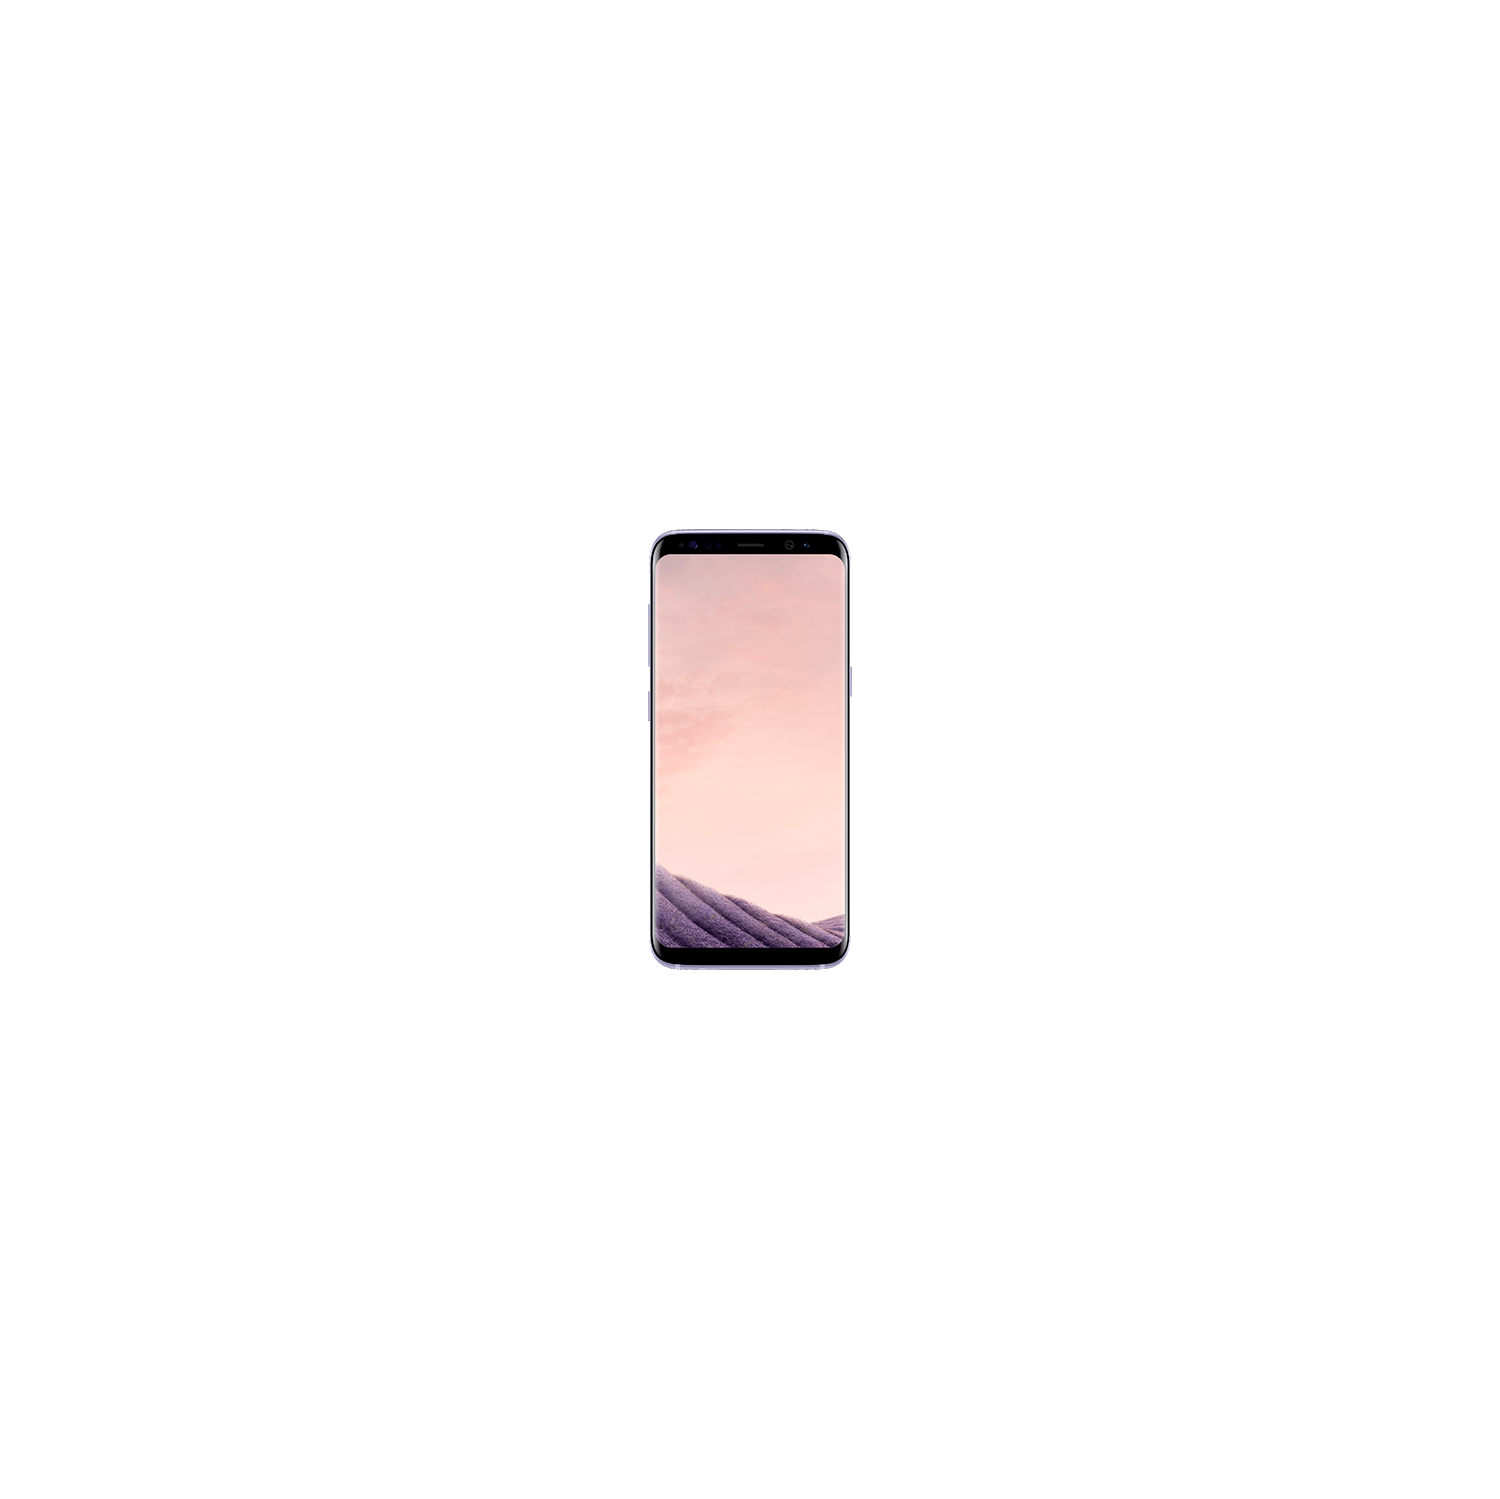 Refurbished (Good) - Samsung Galaxy S8 64GB Smartphone - Orchid Gray - Unlocked